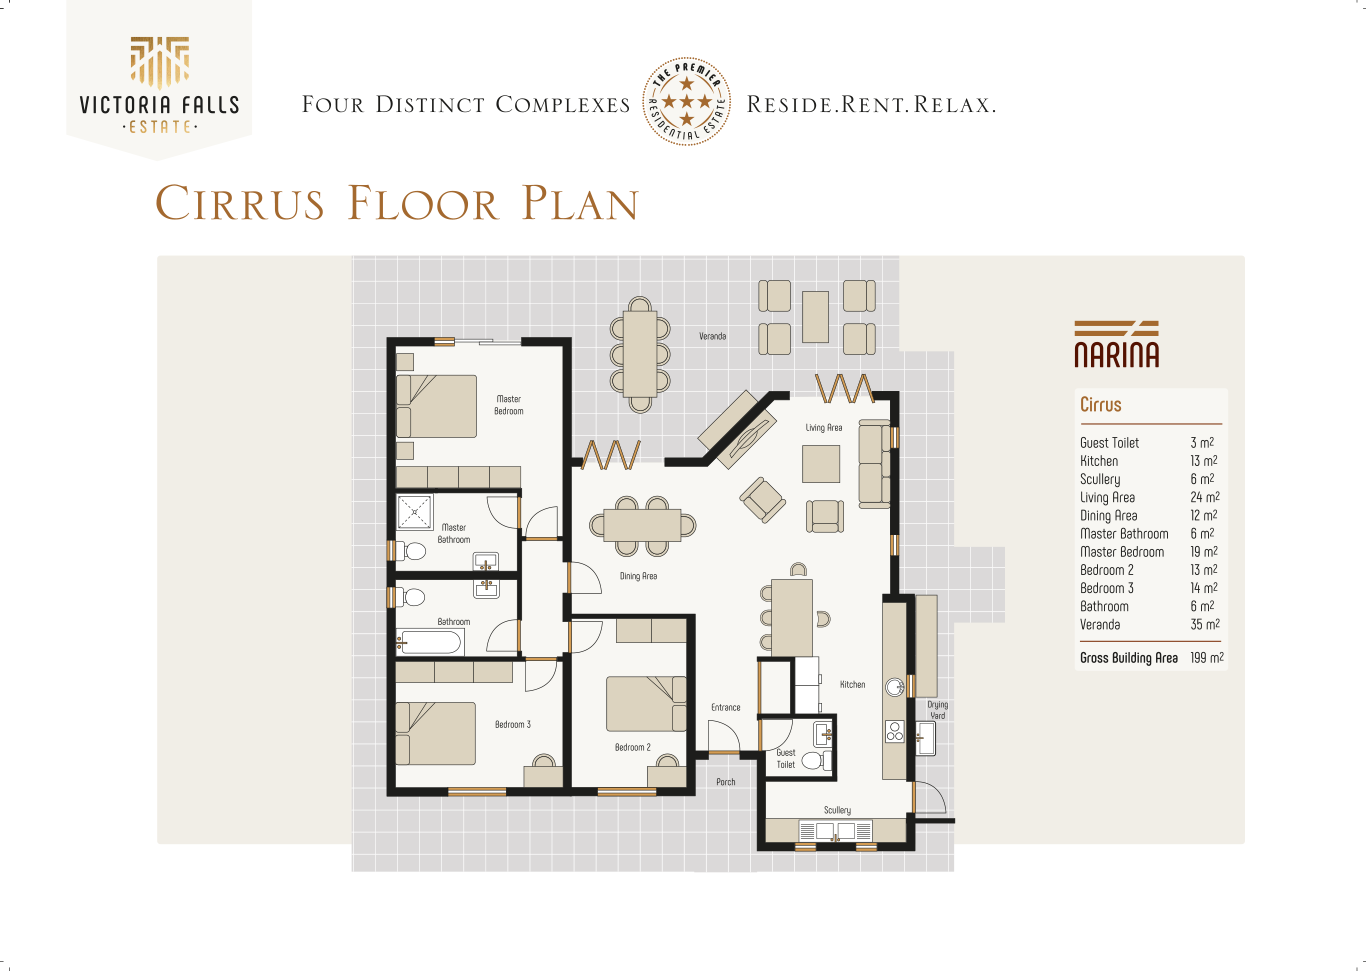 VFE-Narina-Cirrus---Floor-Plan